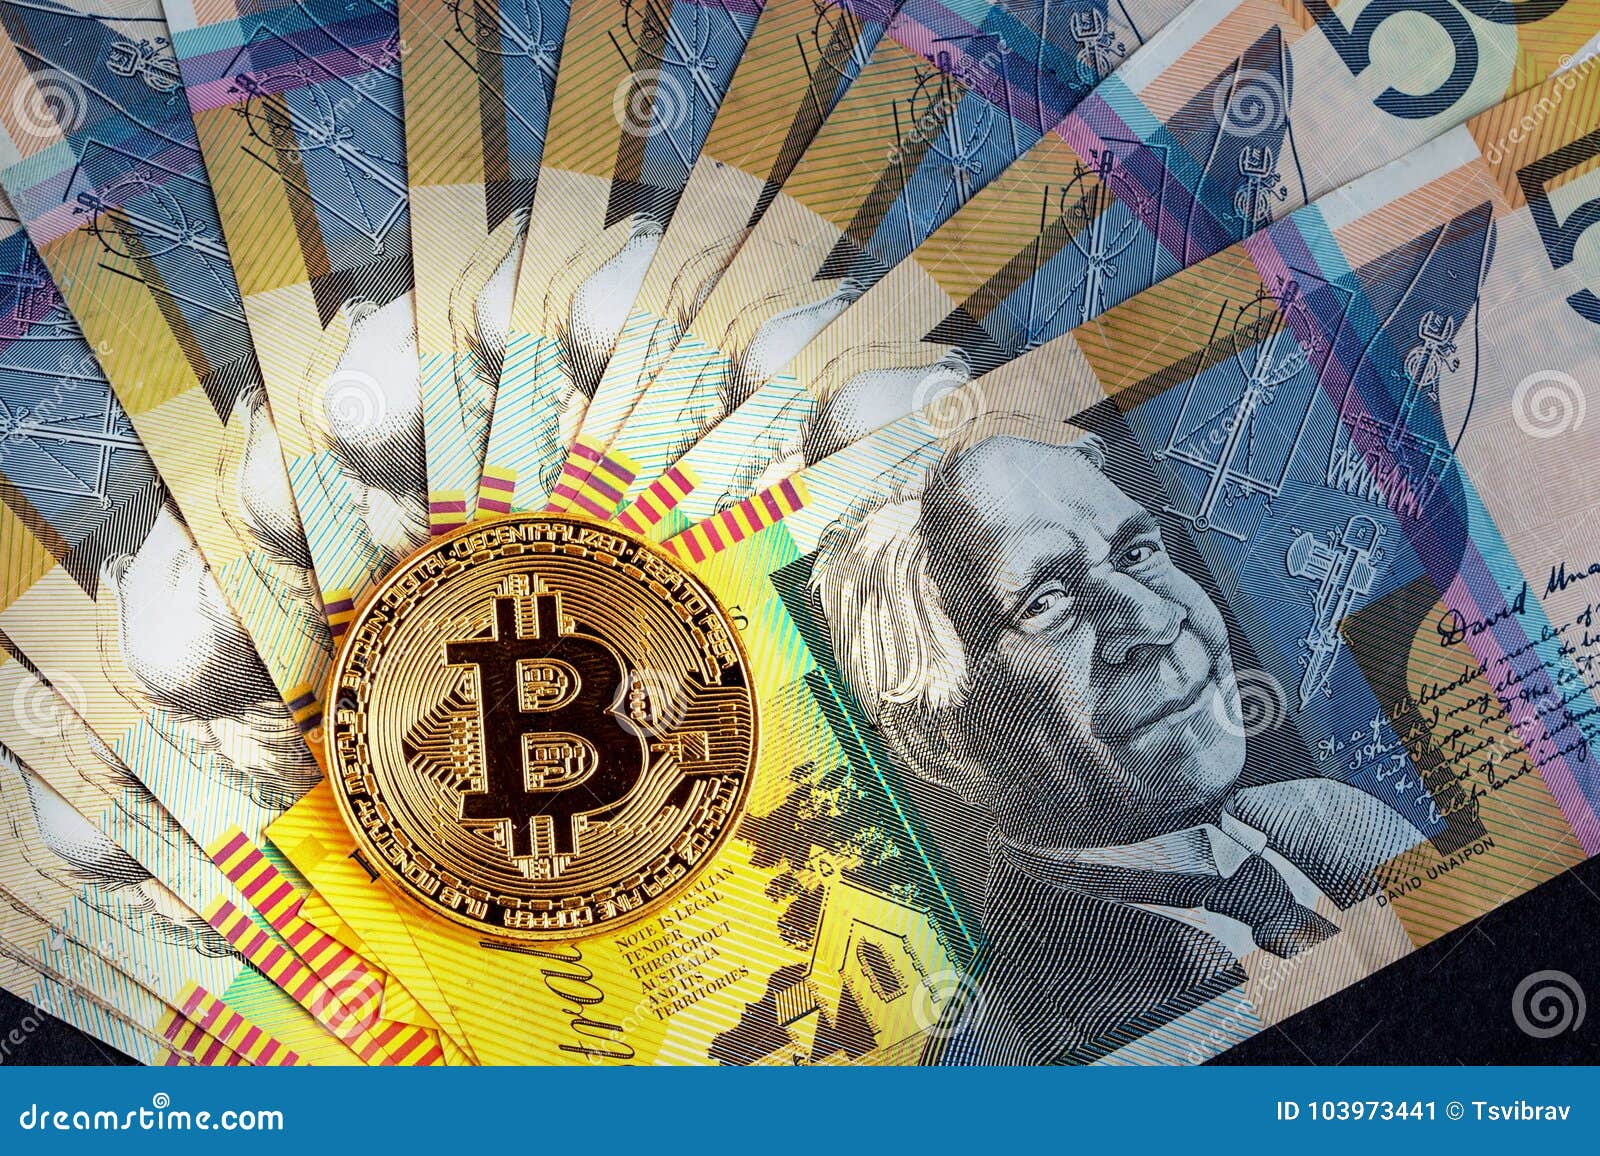 50 usd to bitcoin cash